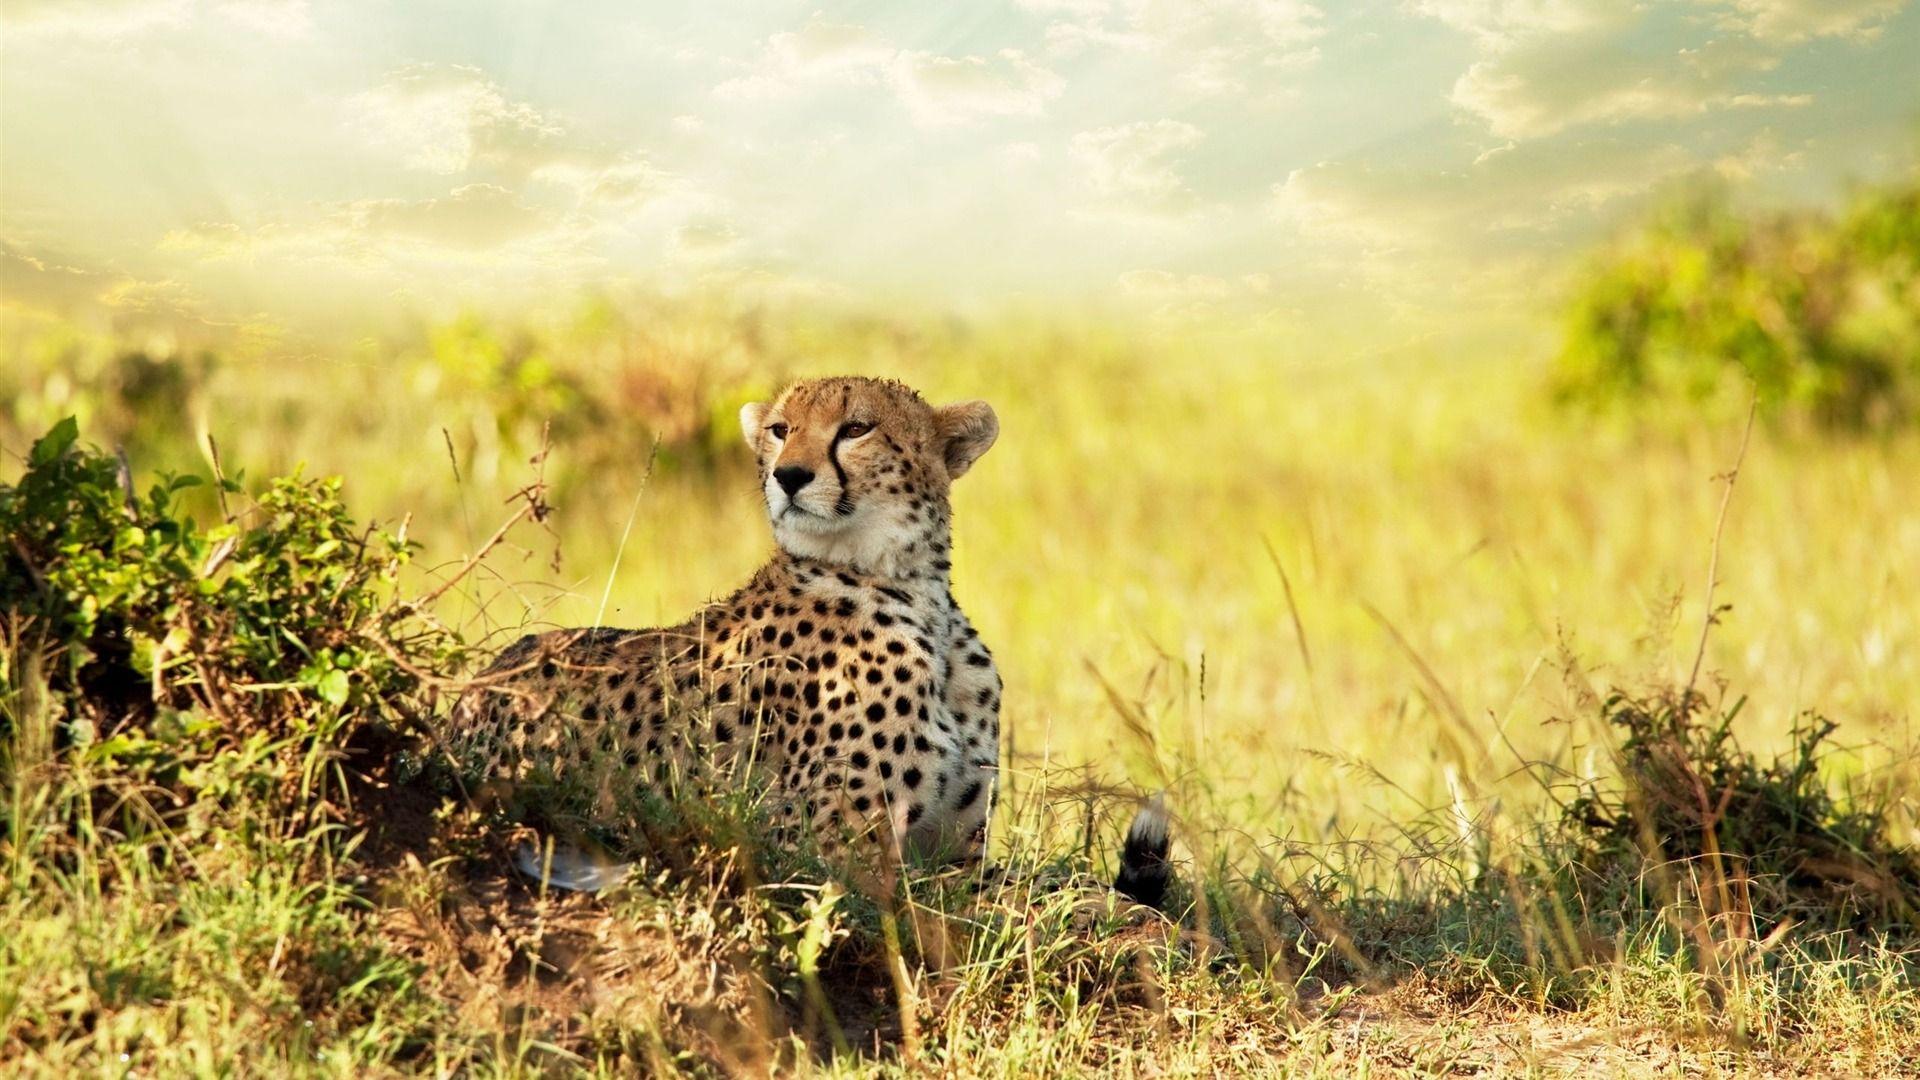 Wallpaper.wiki Cheetah In Africa Animal World Wallpaper 1920x1080